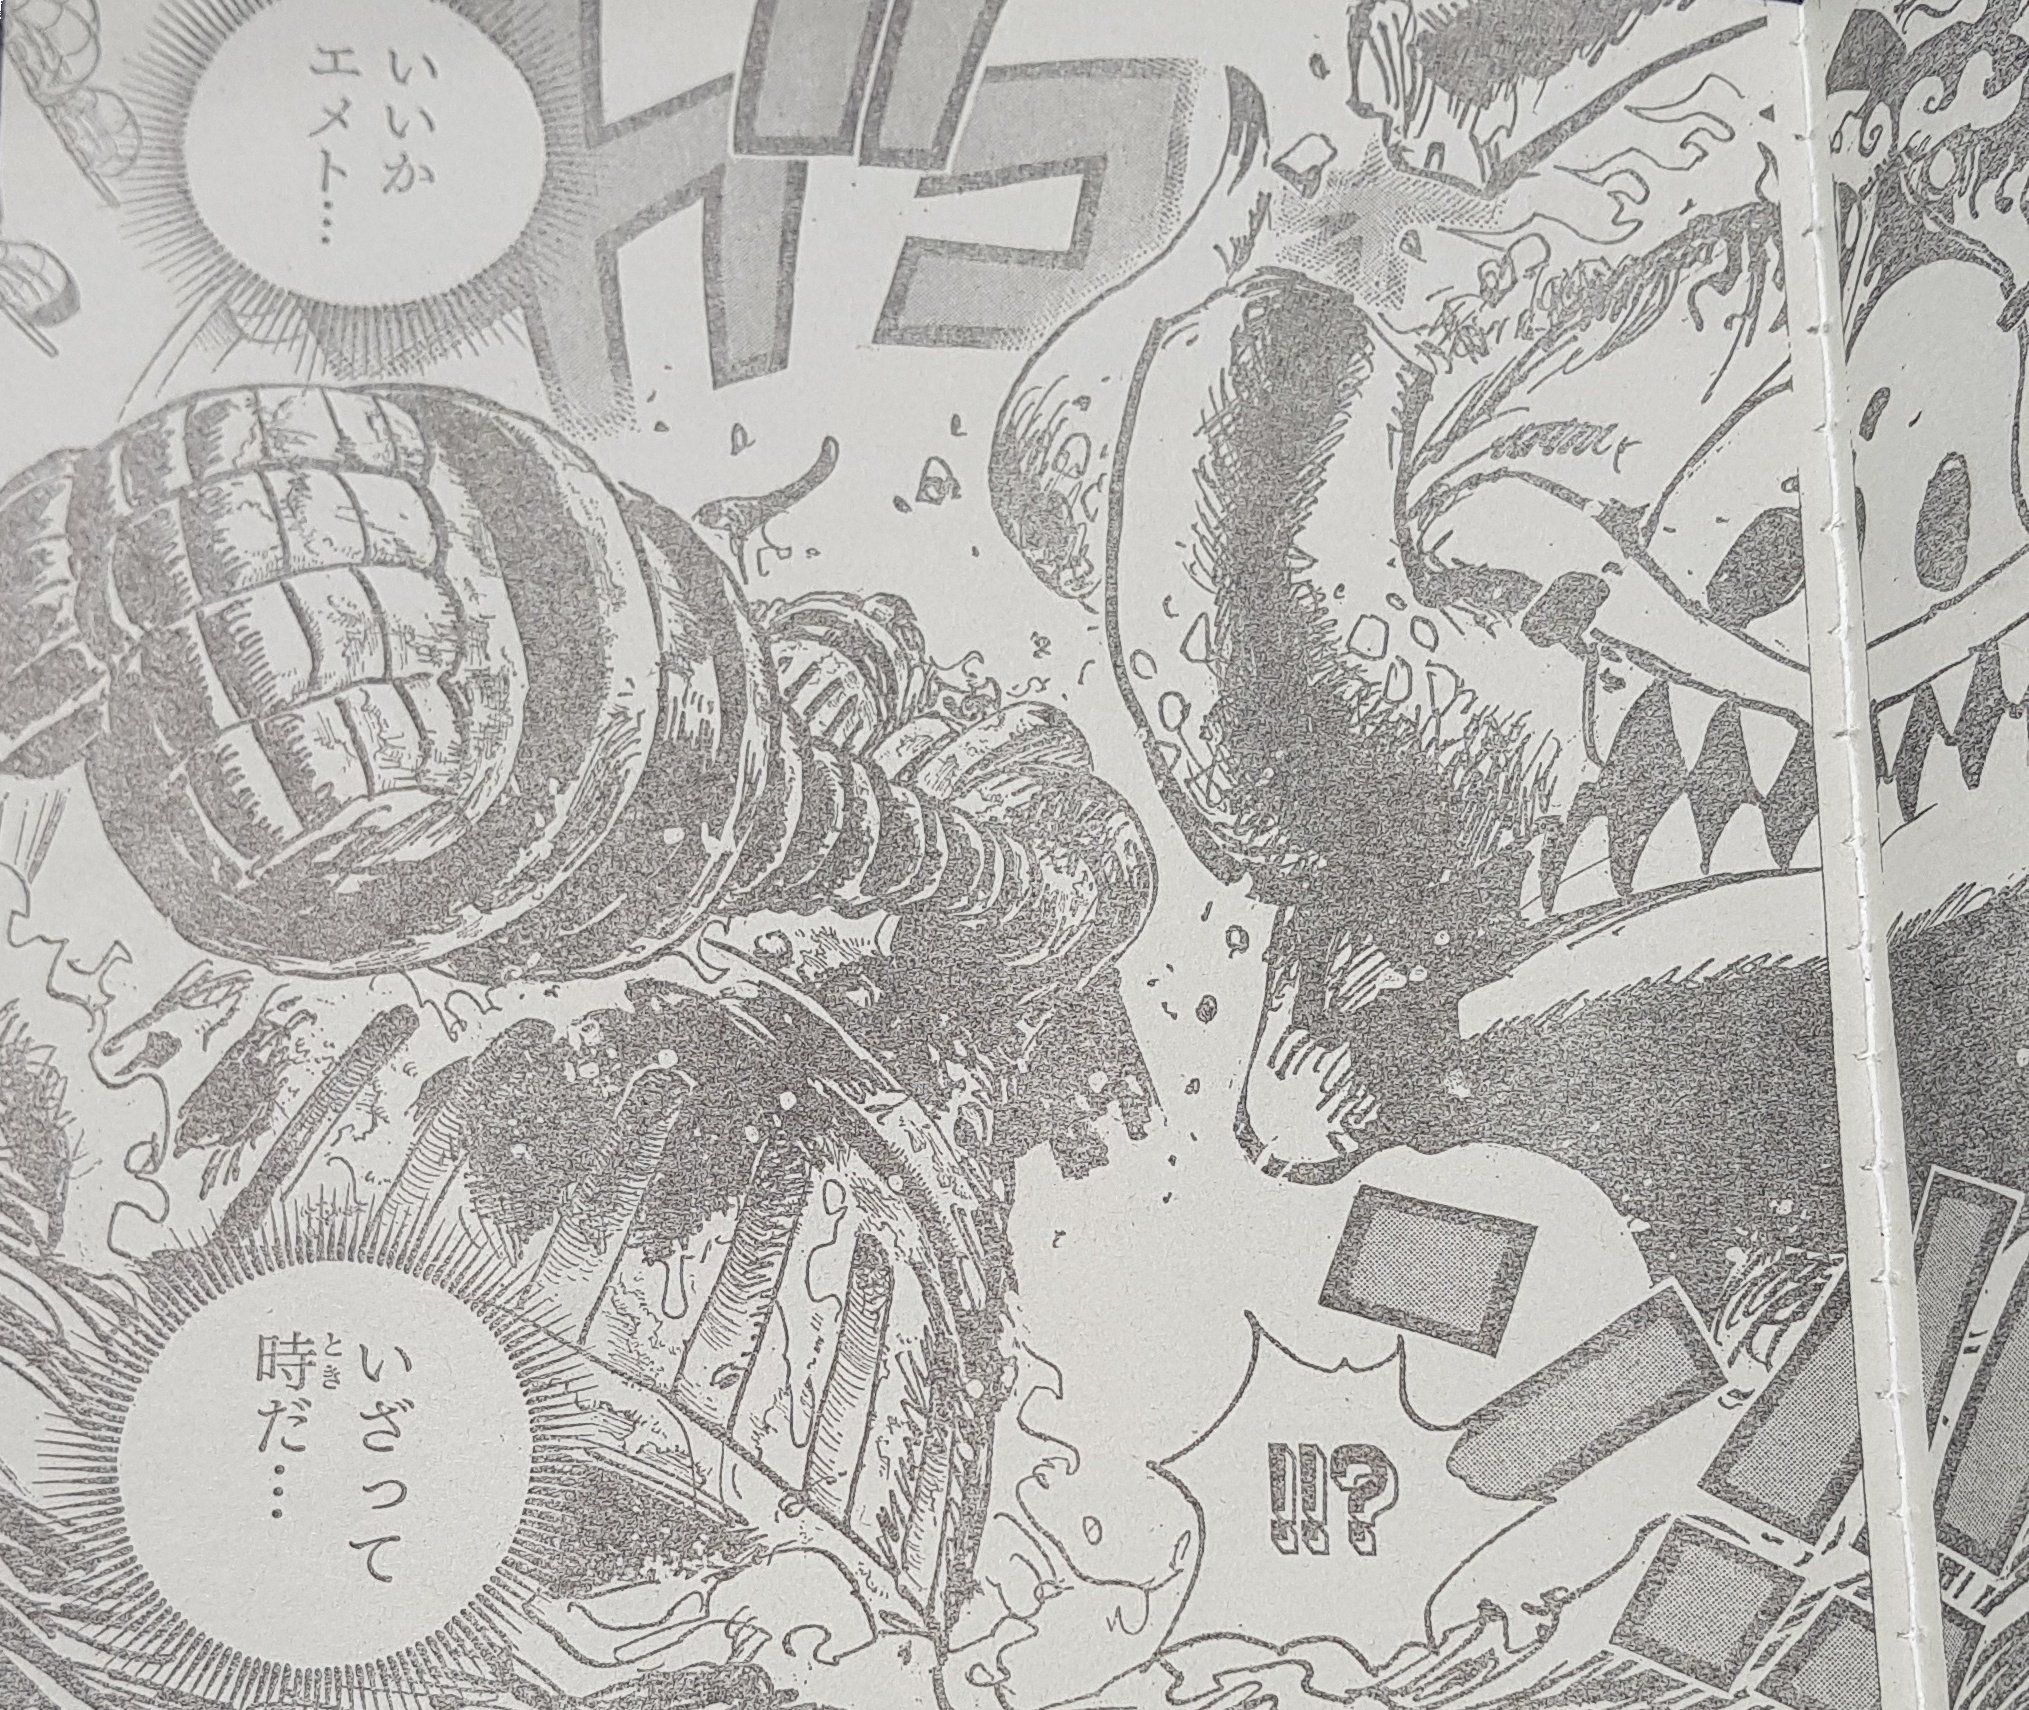 Manga One Piece chapter 1119 versi scan raw: perlihatkan robot raksasa Kuno 'Emeth' menghajar wajah St.Warcury